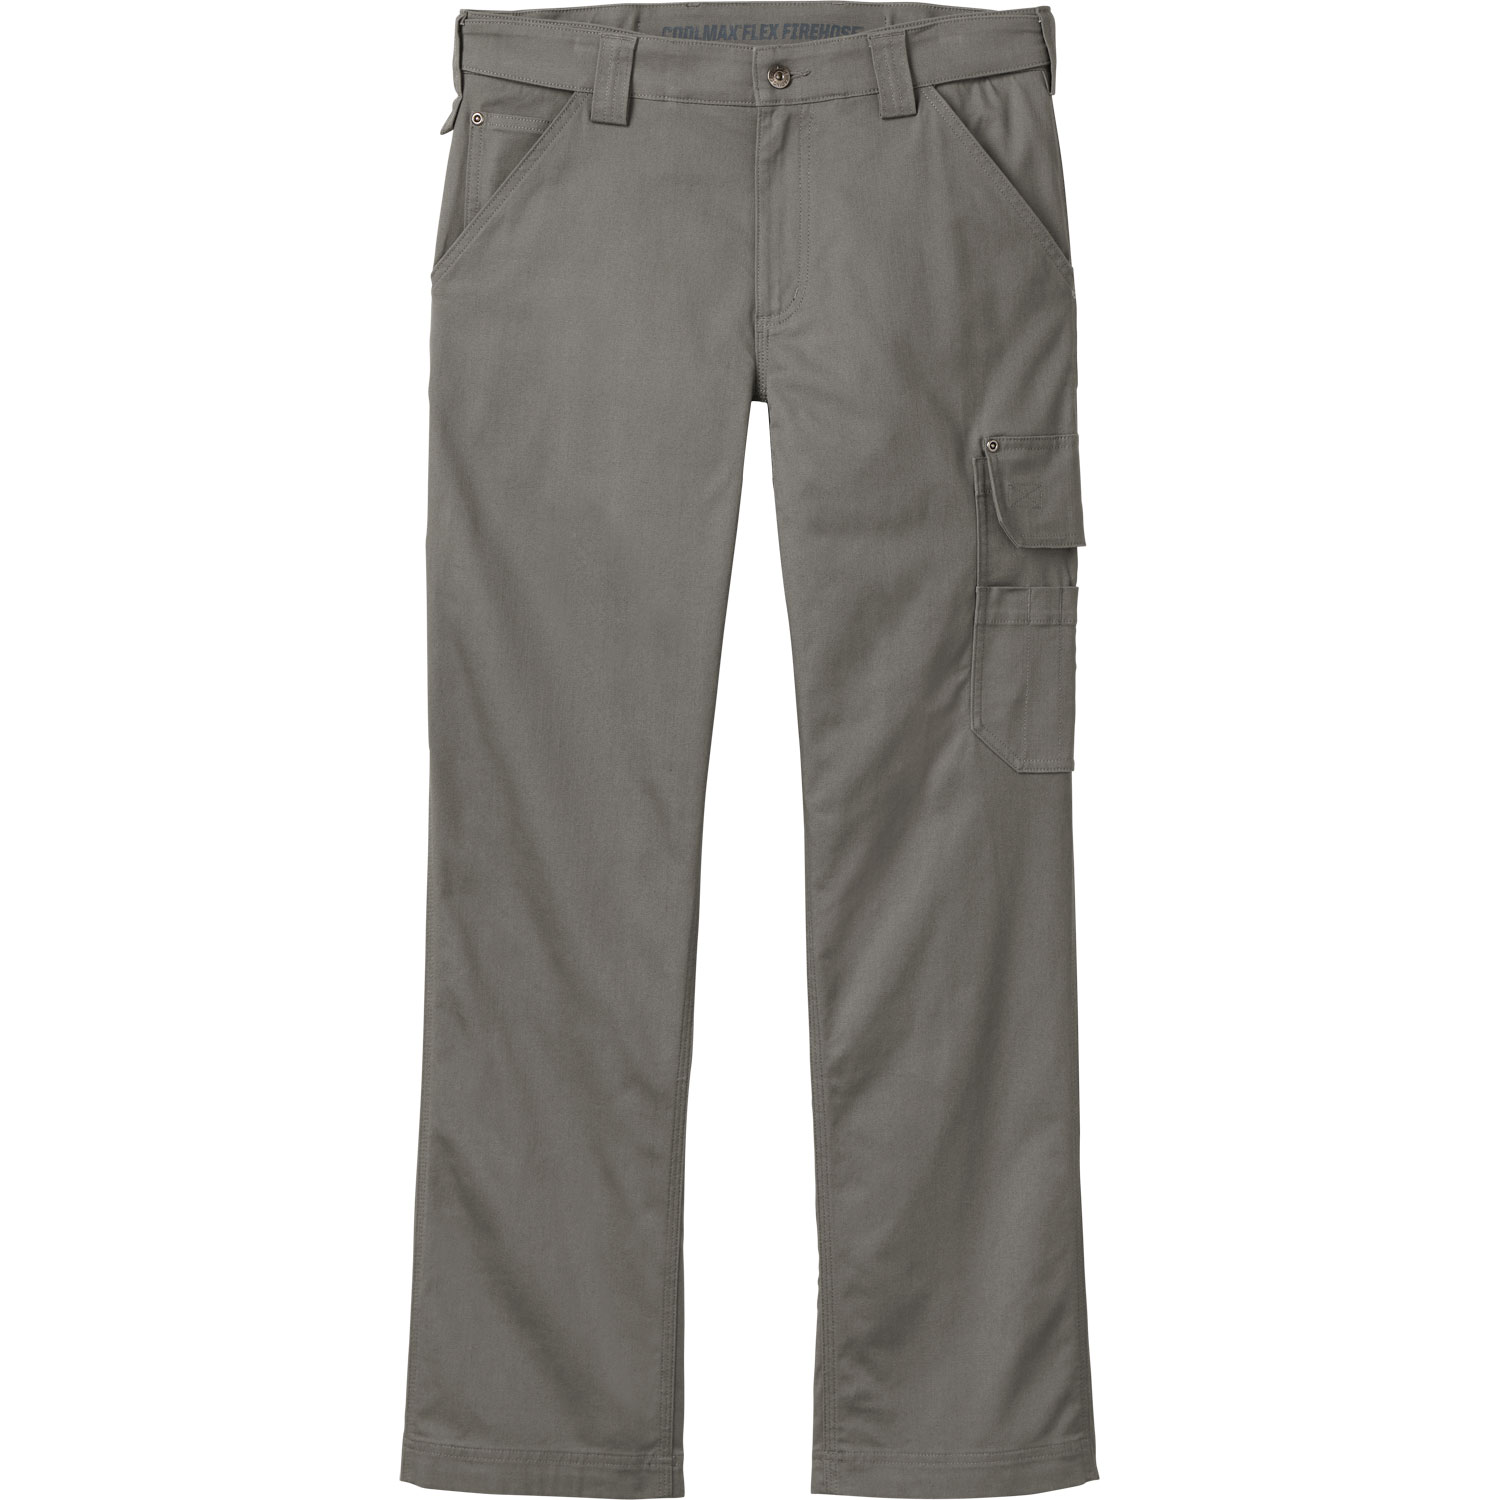 Men's DuluthFlex Fire Hose CoolMax Relaxed Fit Cargo Pants | Duluth ...